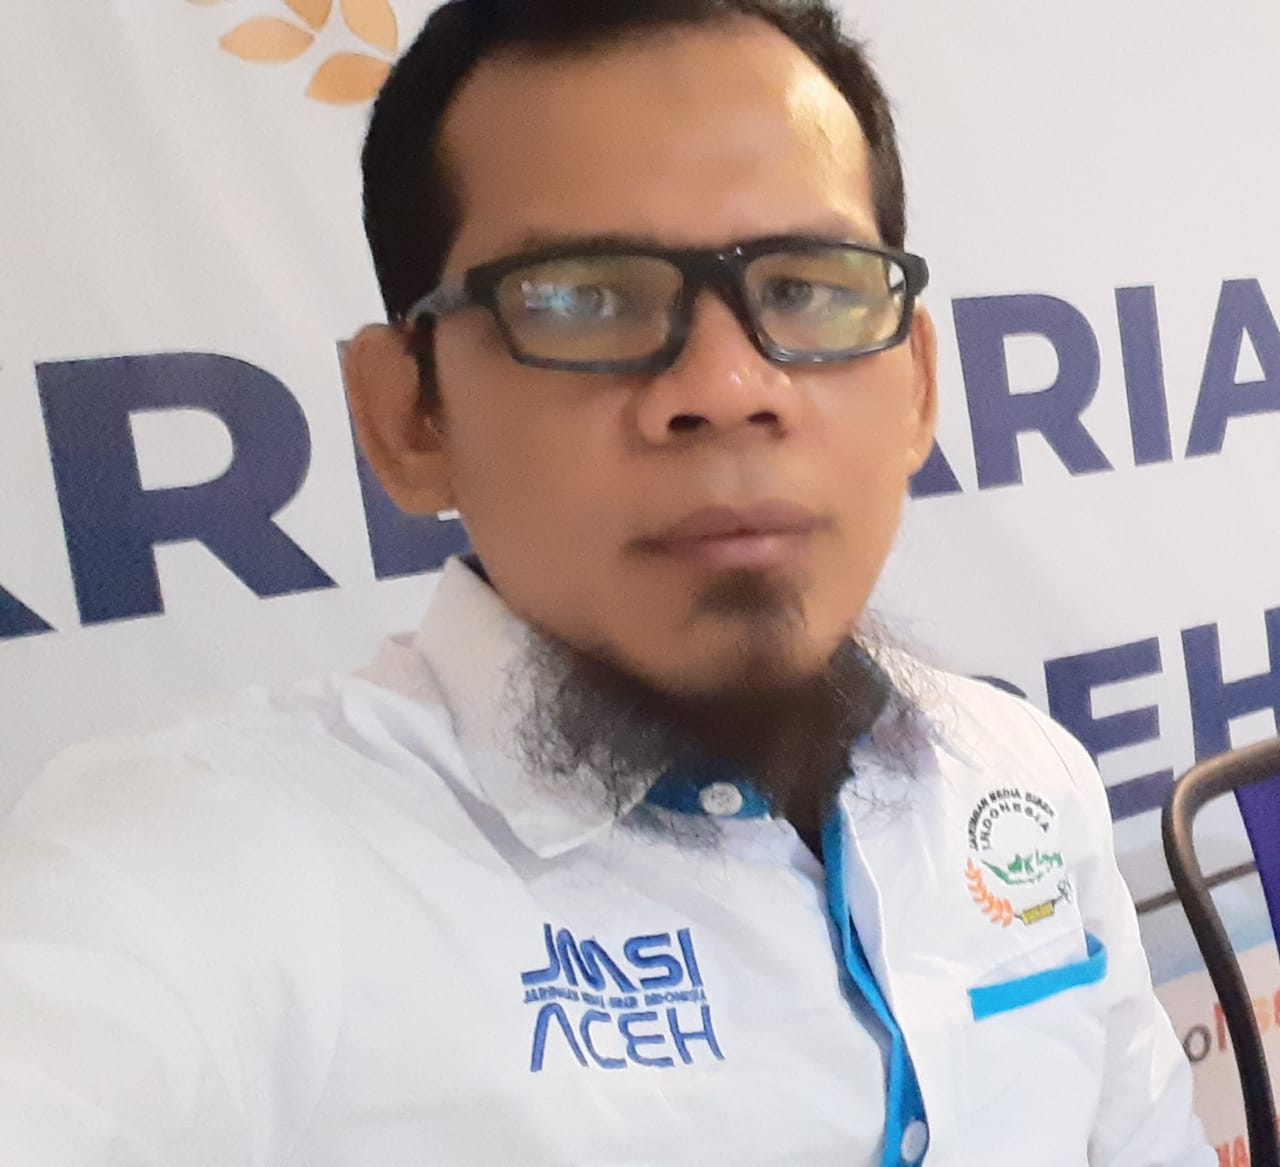 Ketua Pengurus Daerah JMSI Aceh, Hendro Saky